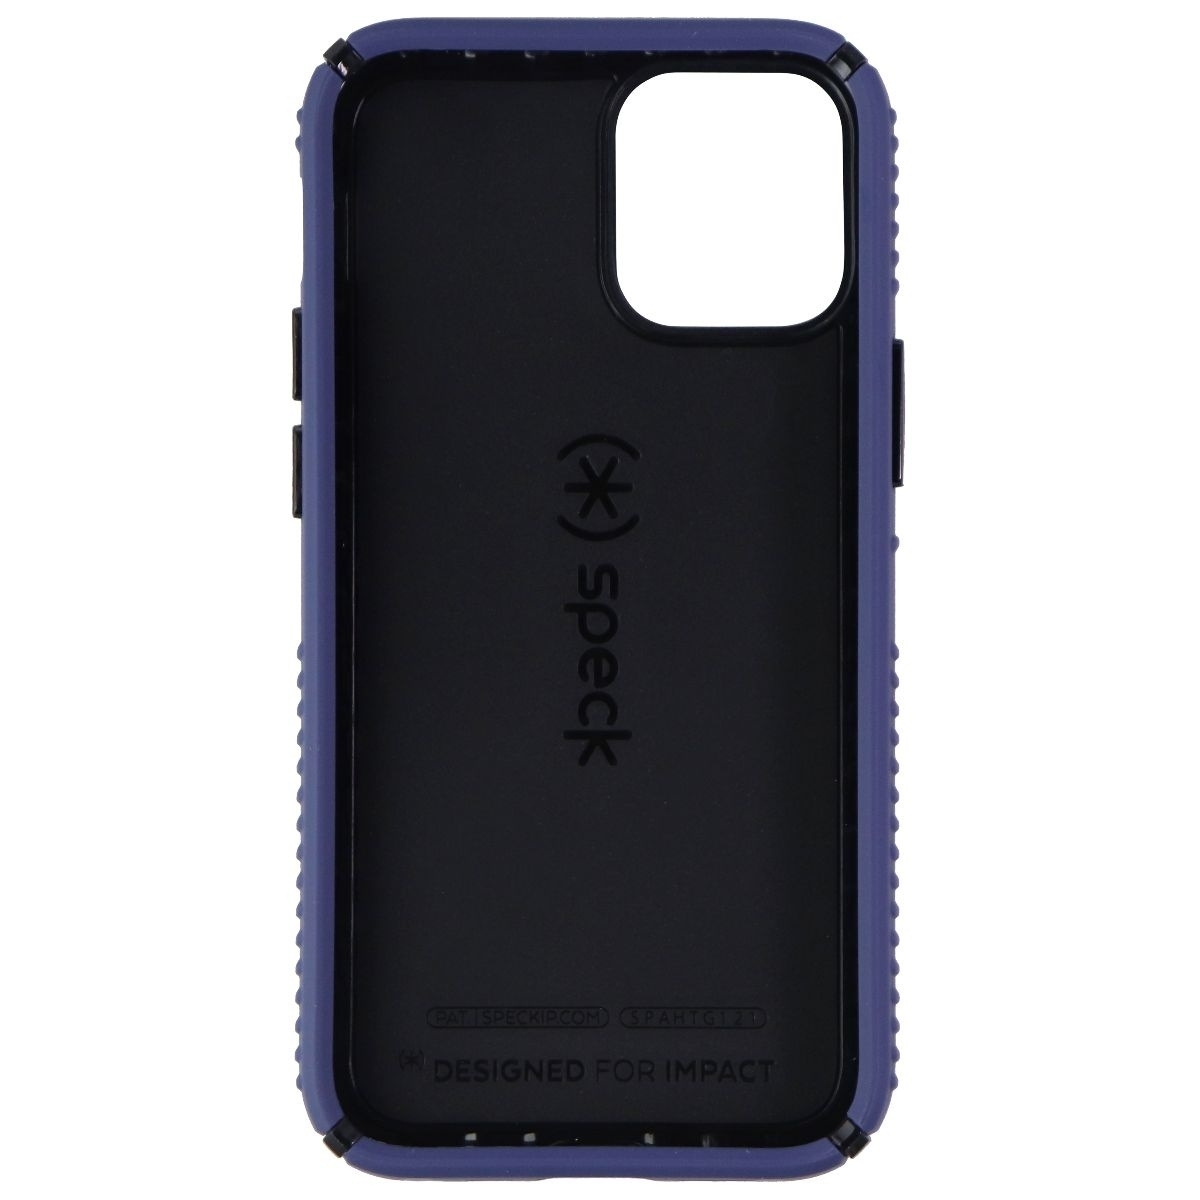 Speck Presidio 2 Grip Series Case For Apple IPhone 12 Mini - Coastal Blue/Black